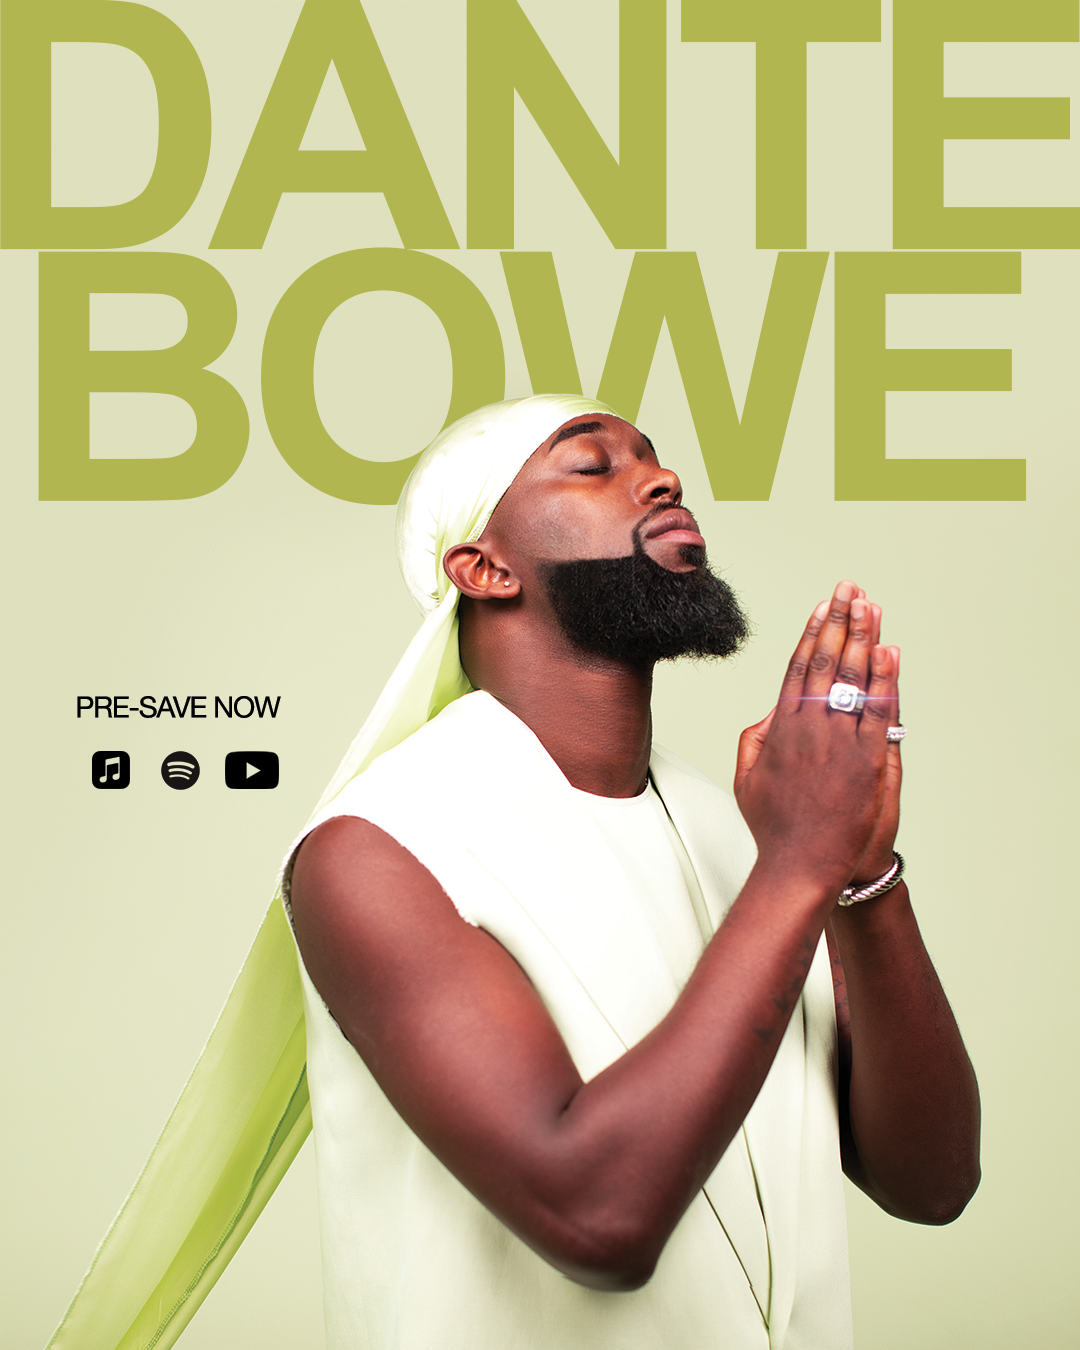 Dante Bowe New Album Out July 21 Pre-Save